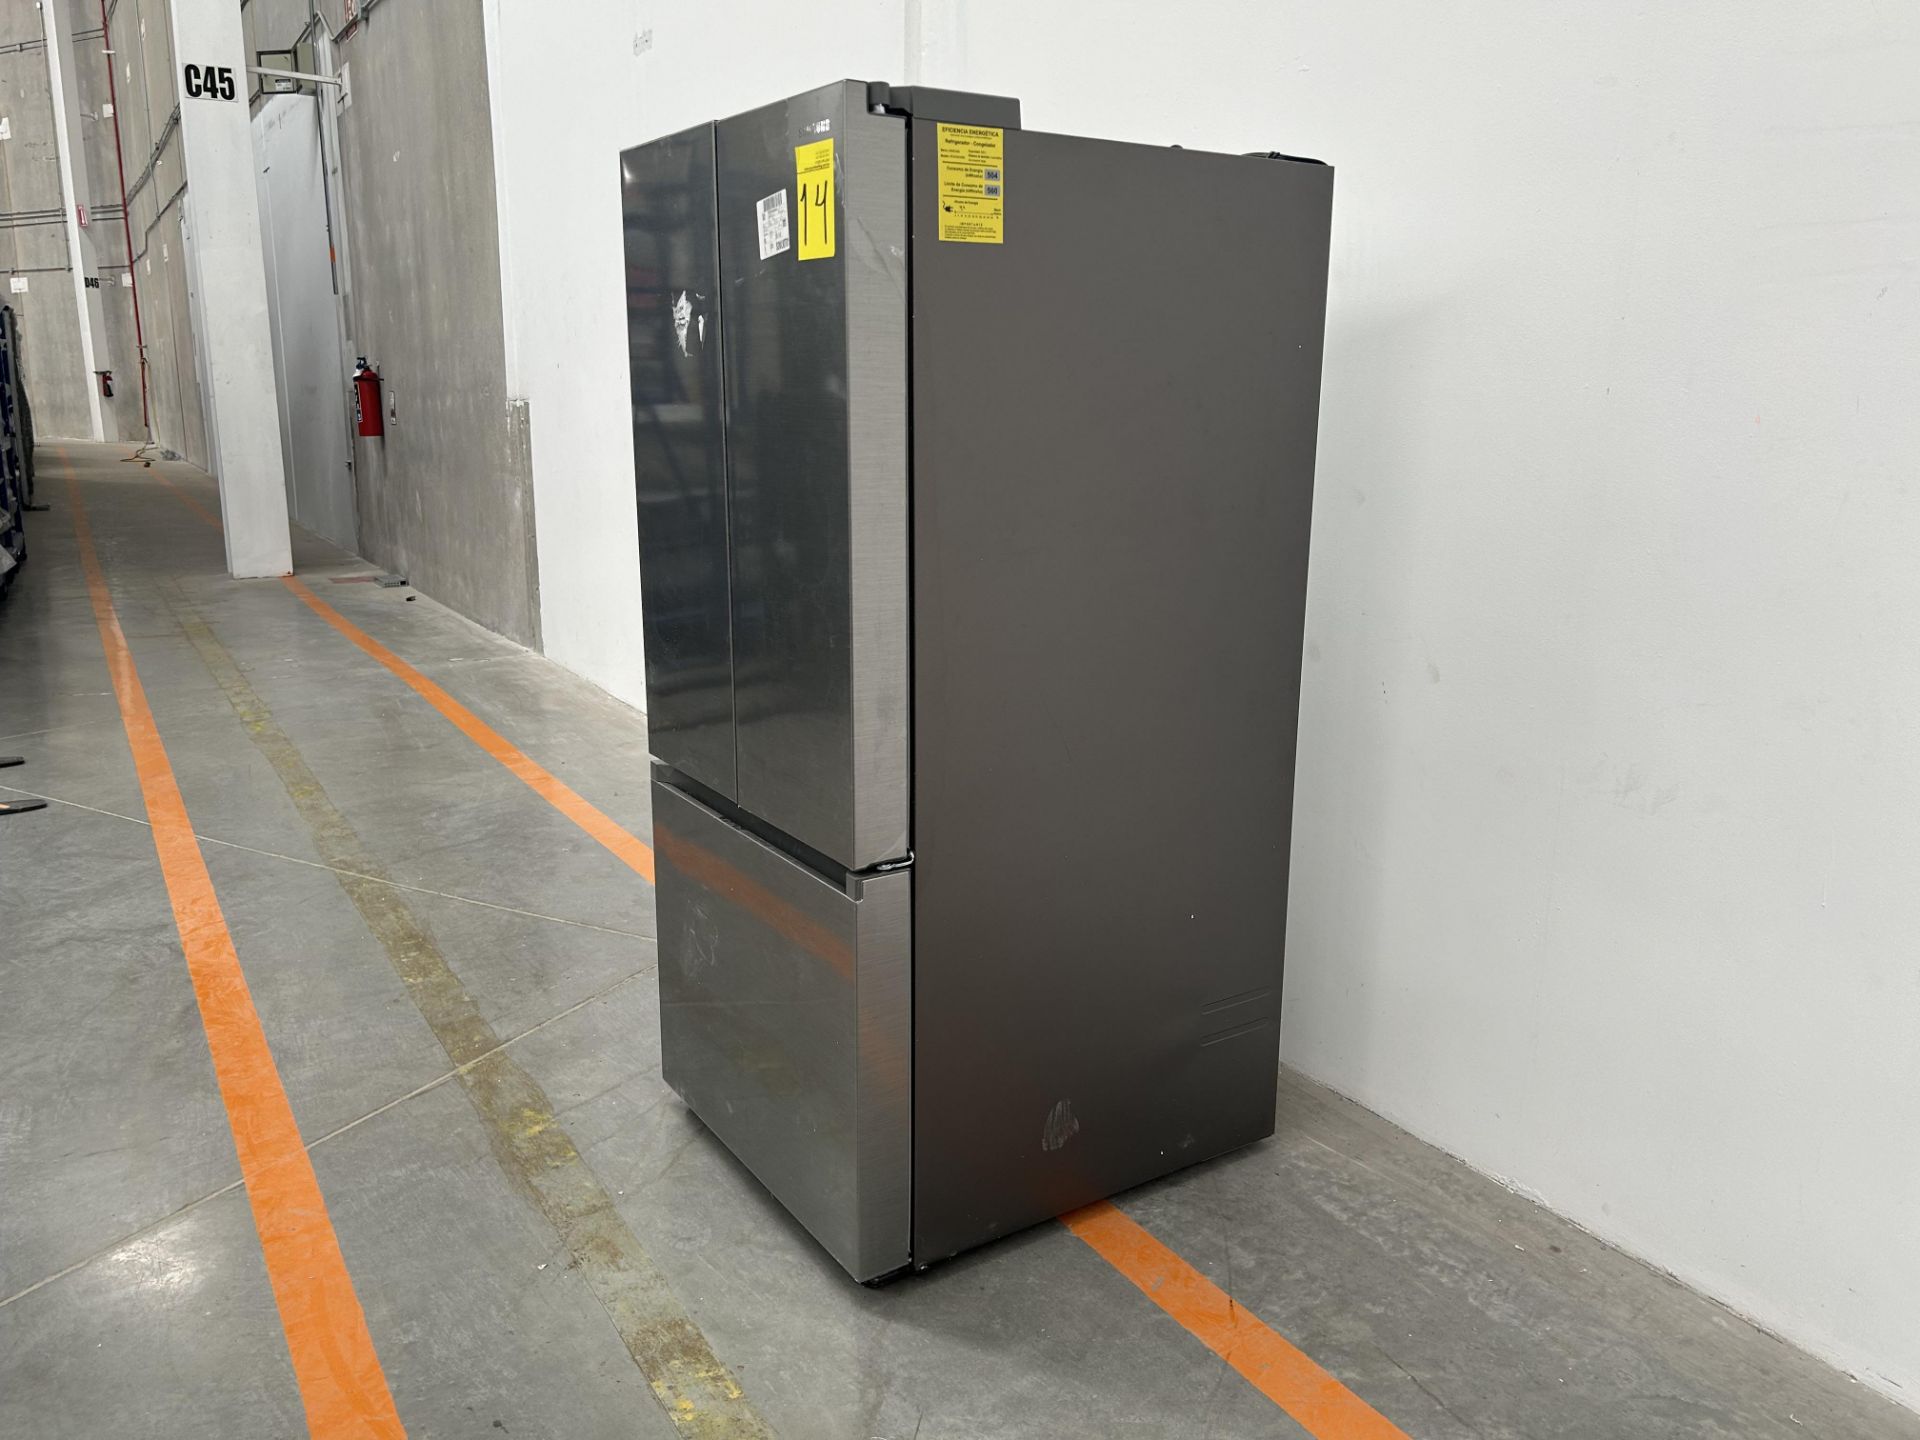 (NUEVO) Refrigerador Marca SAMSUNG, Modelo RF22A410S9, Serie 01694K, Color GRIS - Image 3 of 4